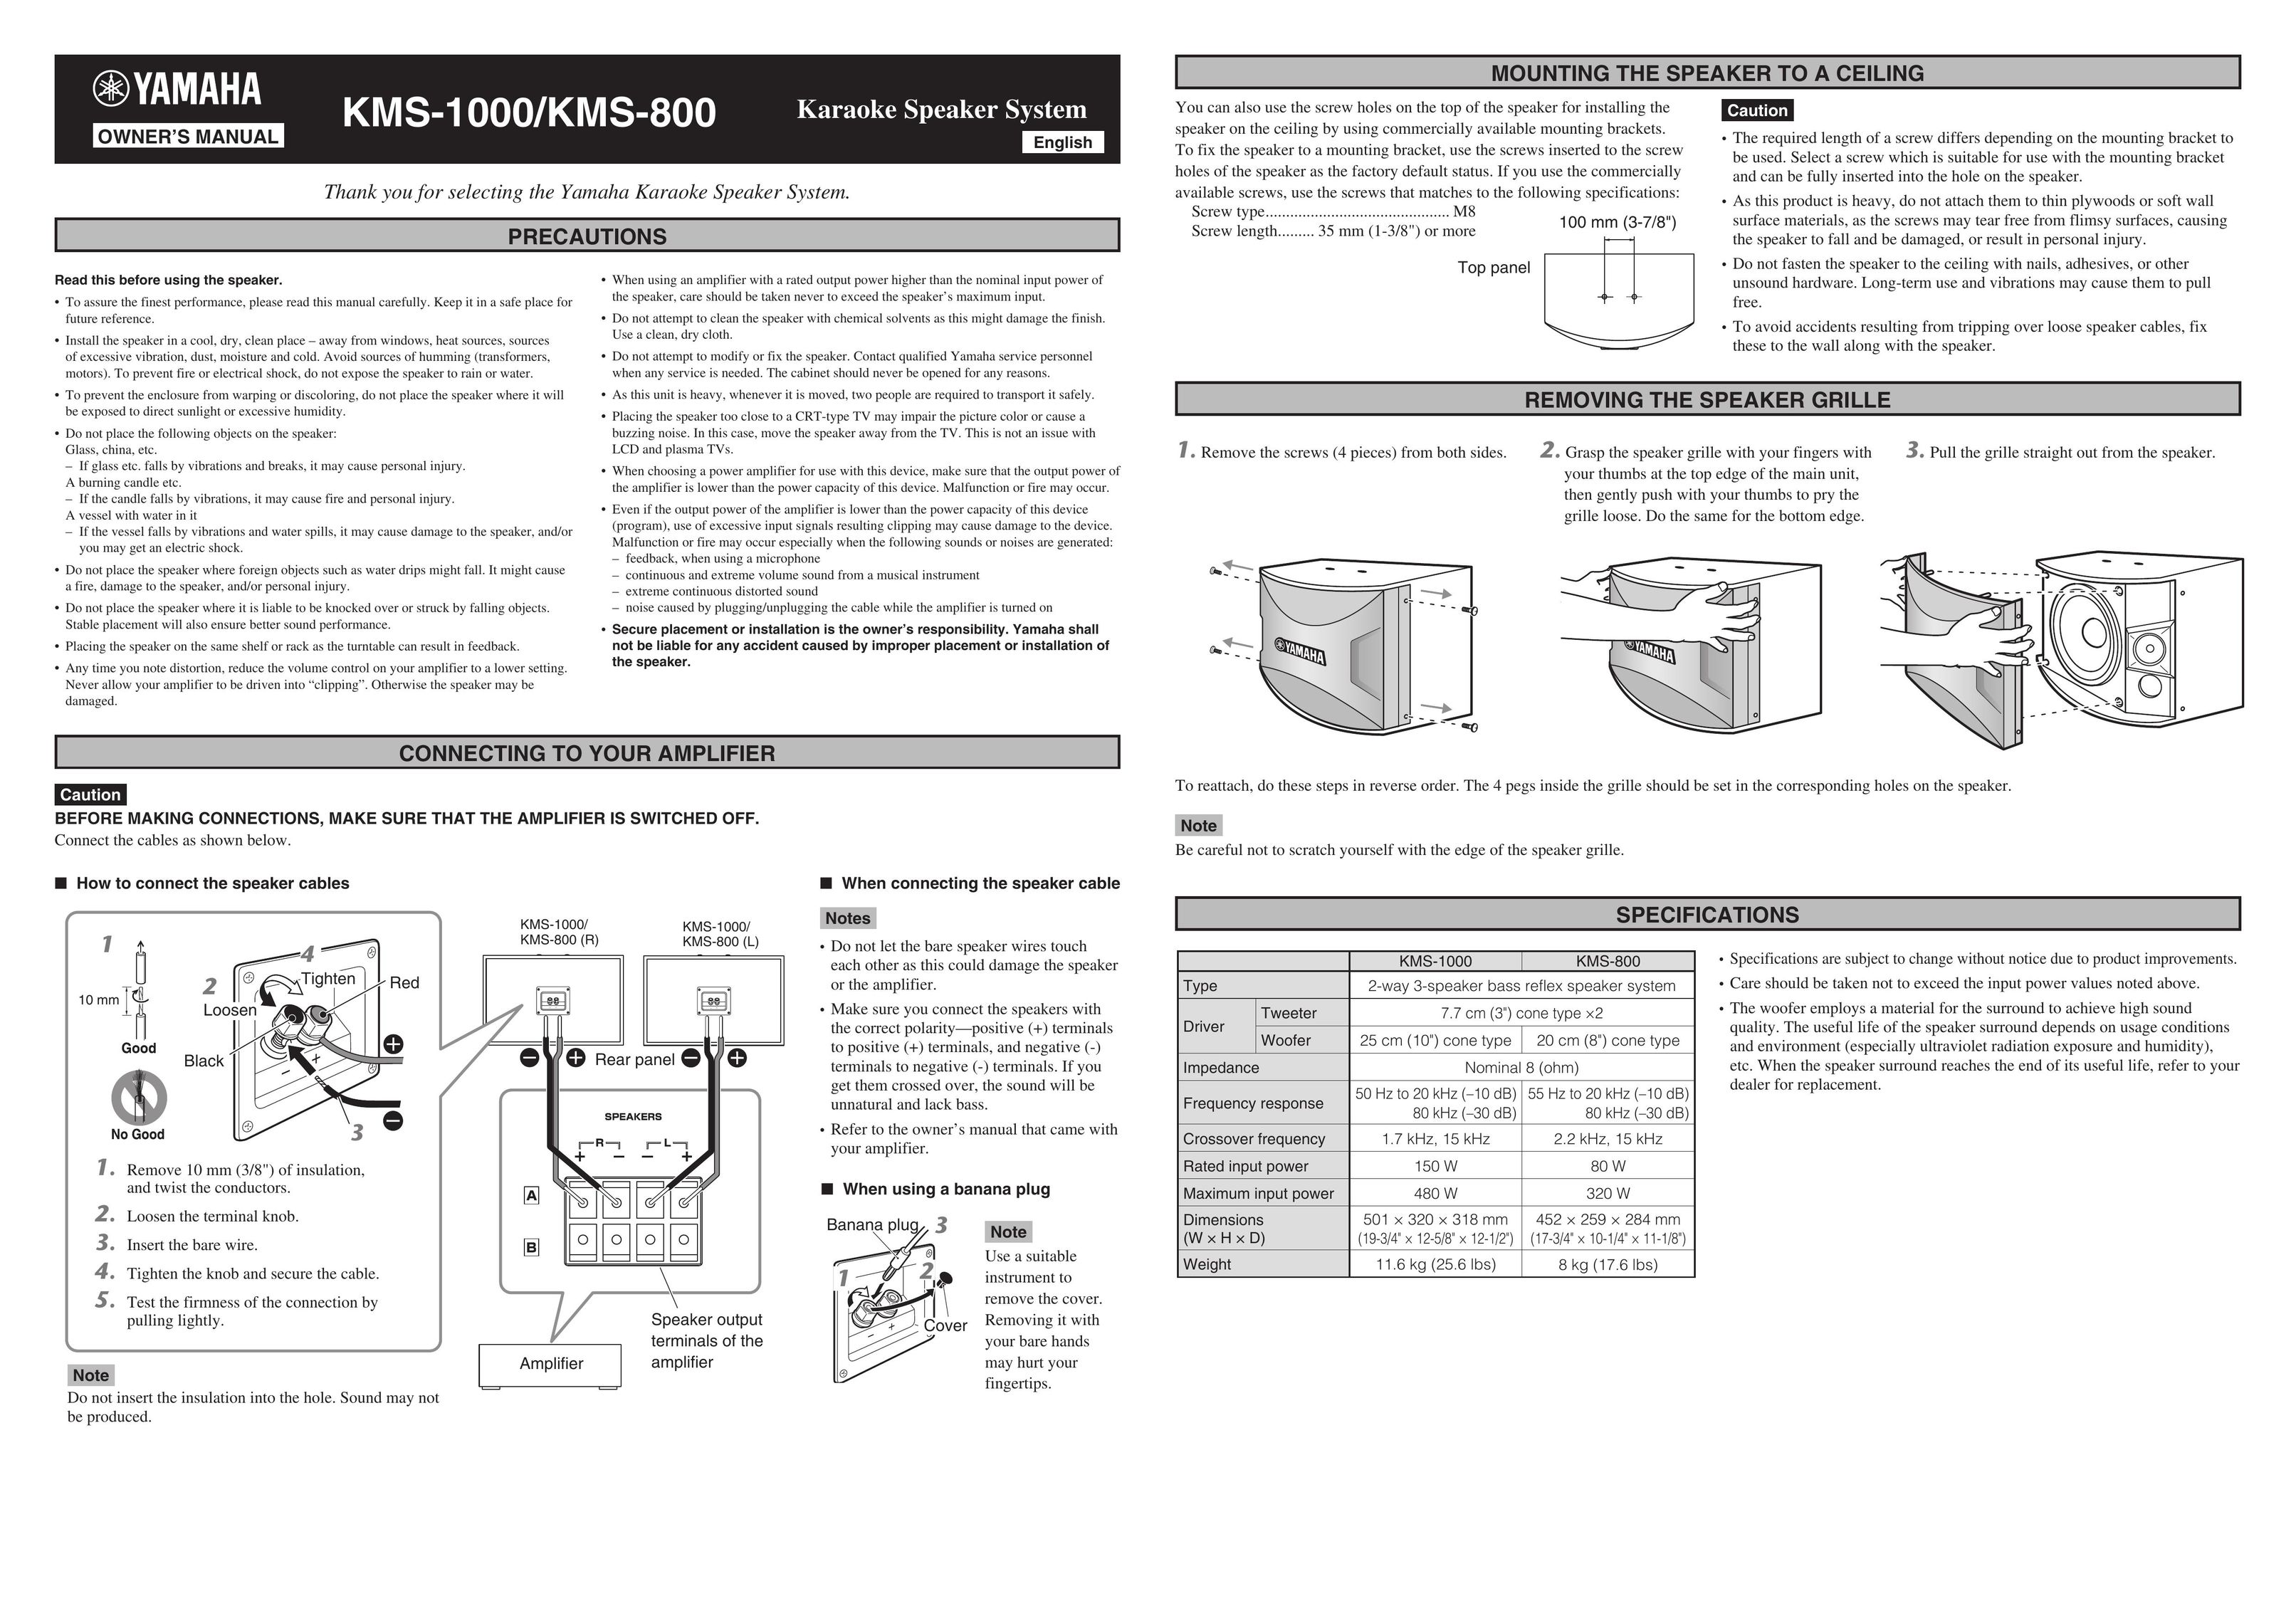 Yamaha KMS-800 Speaker System User Manual